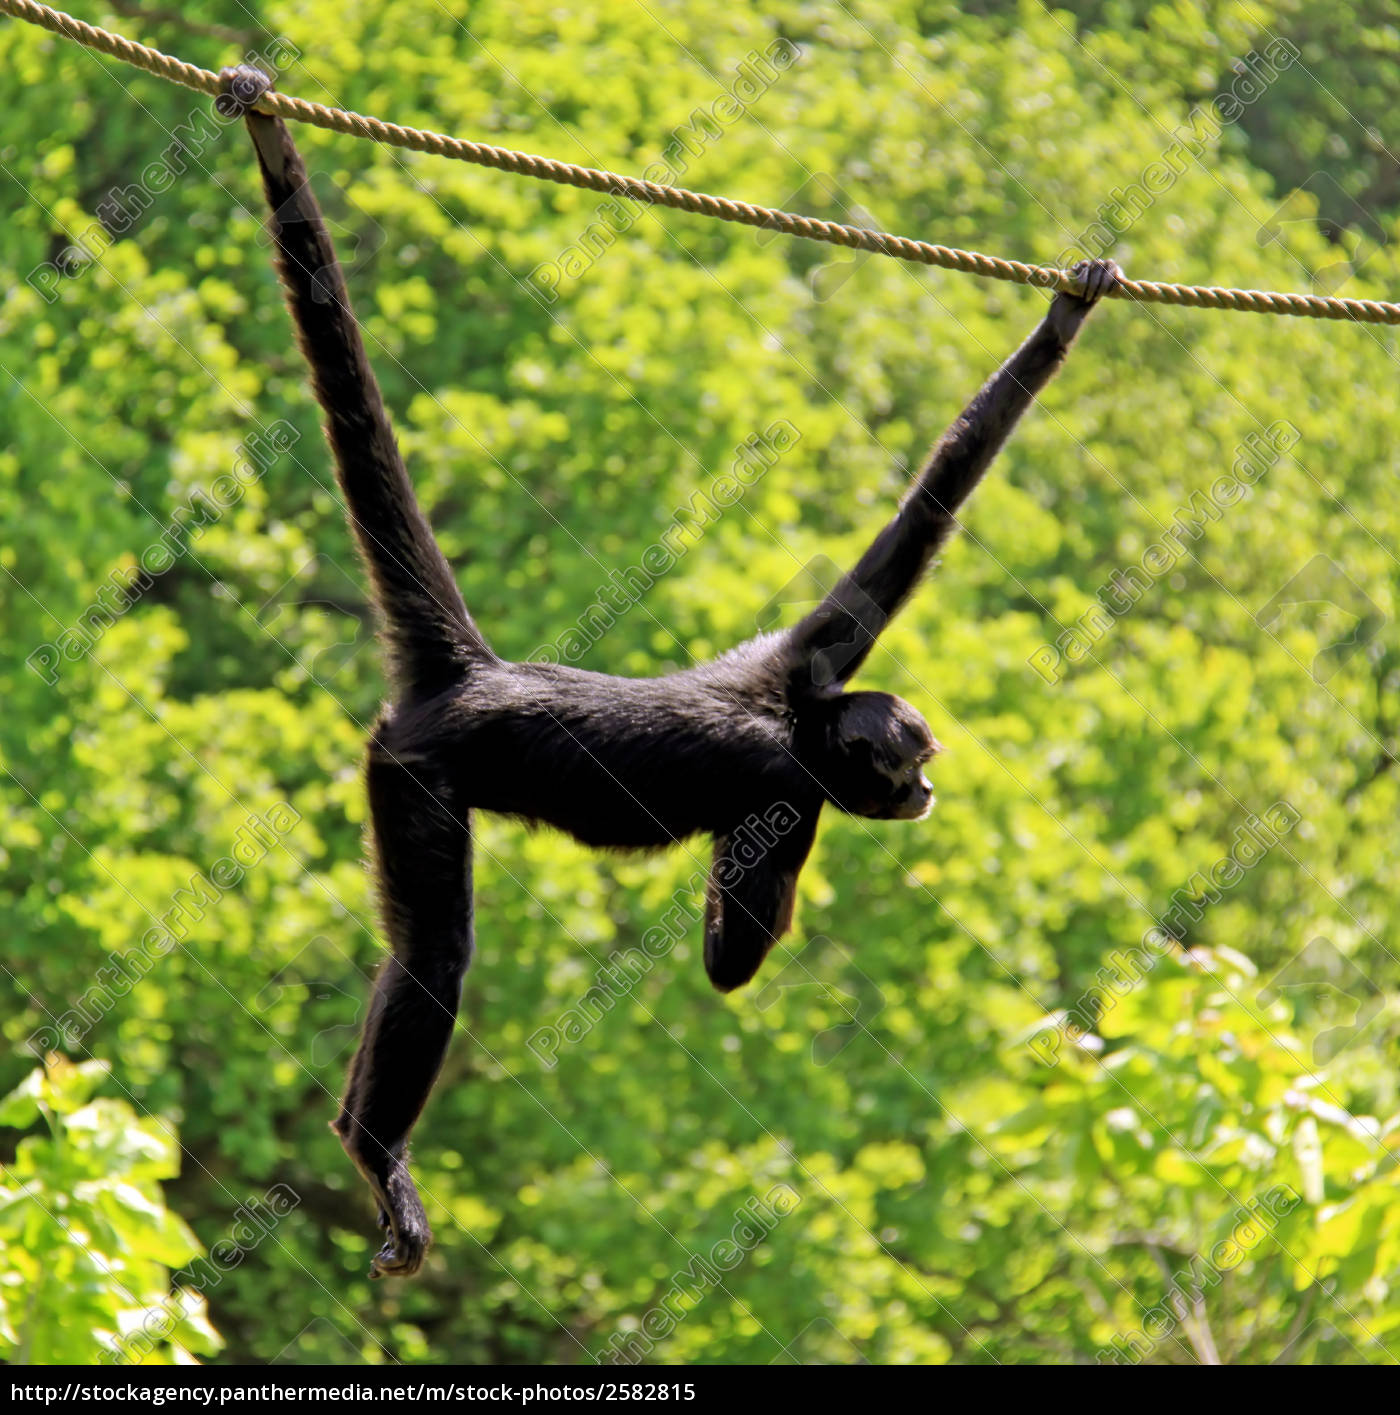 Macaco-aranha-da-colômbia